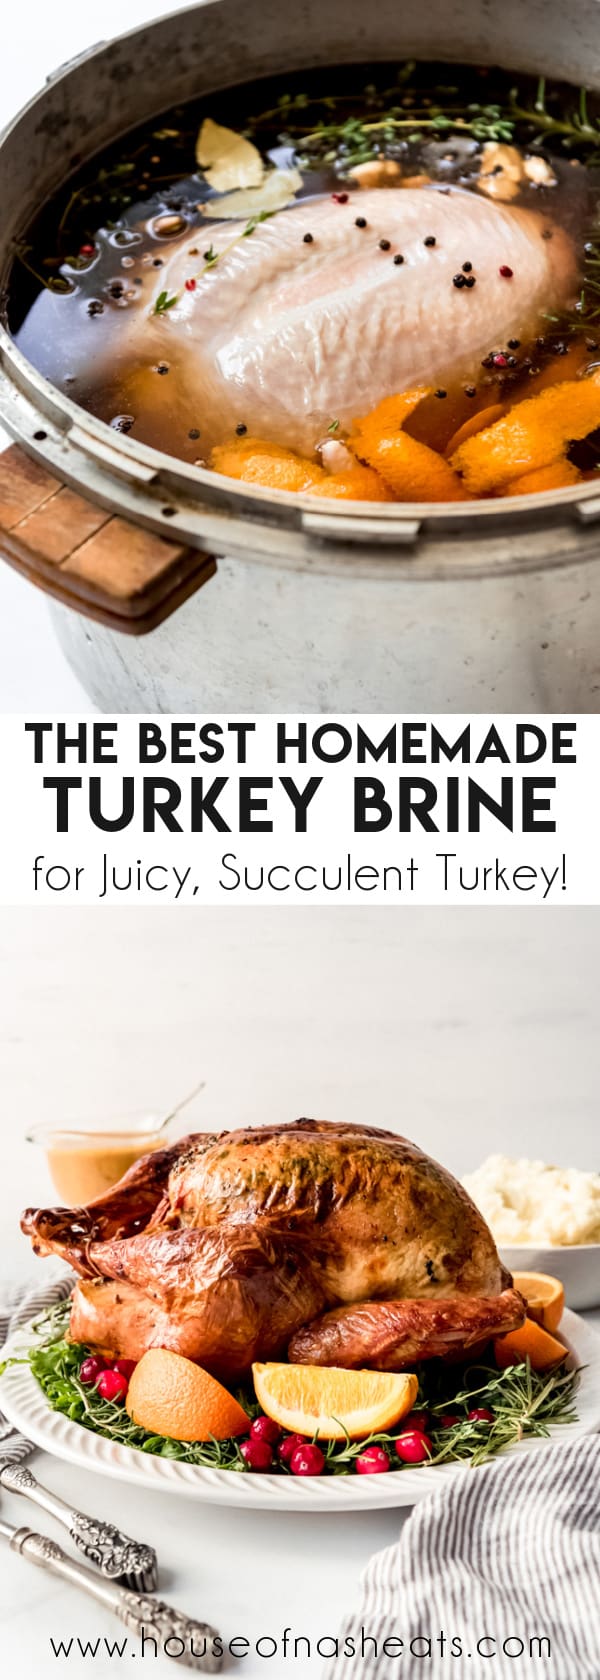 Turkey Brine Recipe - House of Nash Eats